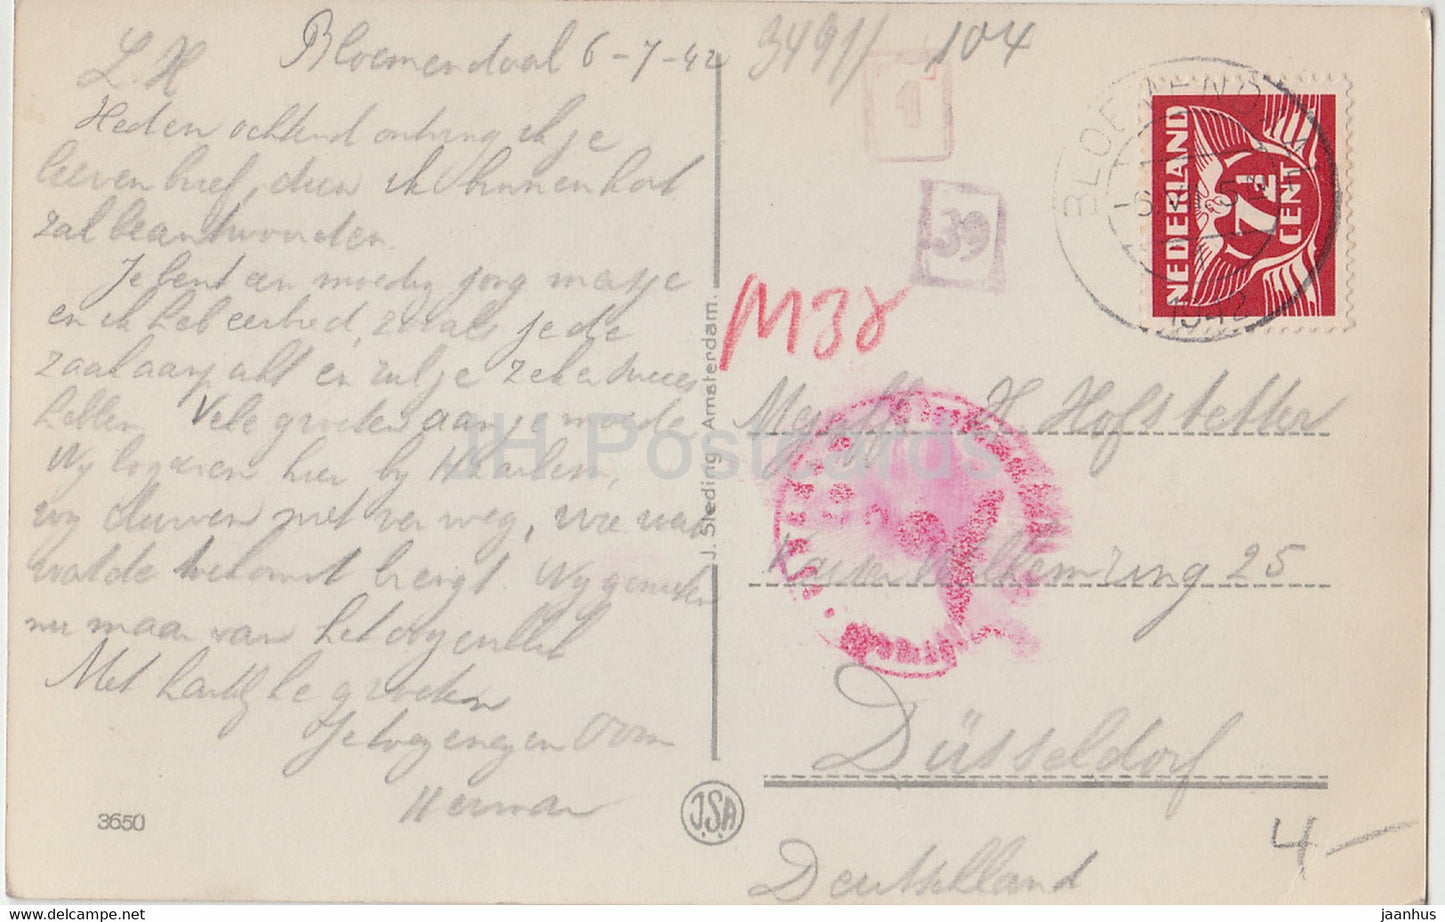 Bloemendaal - Bloemendaalsche Bosch - 3650 - carte postale ancienne - 1942 - Pays-Bas - utilisé